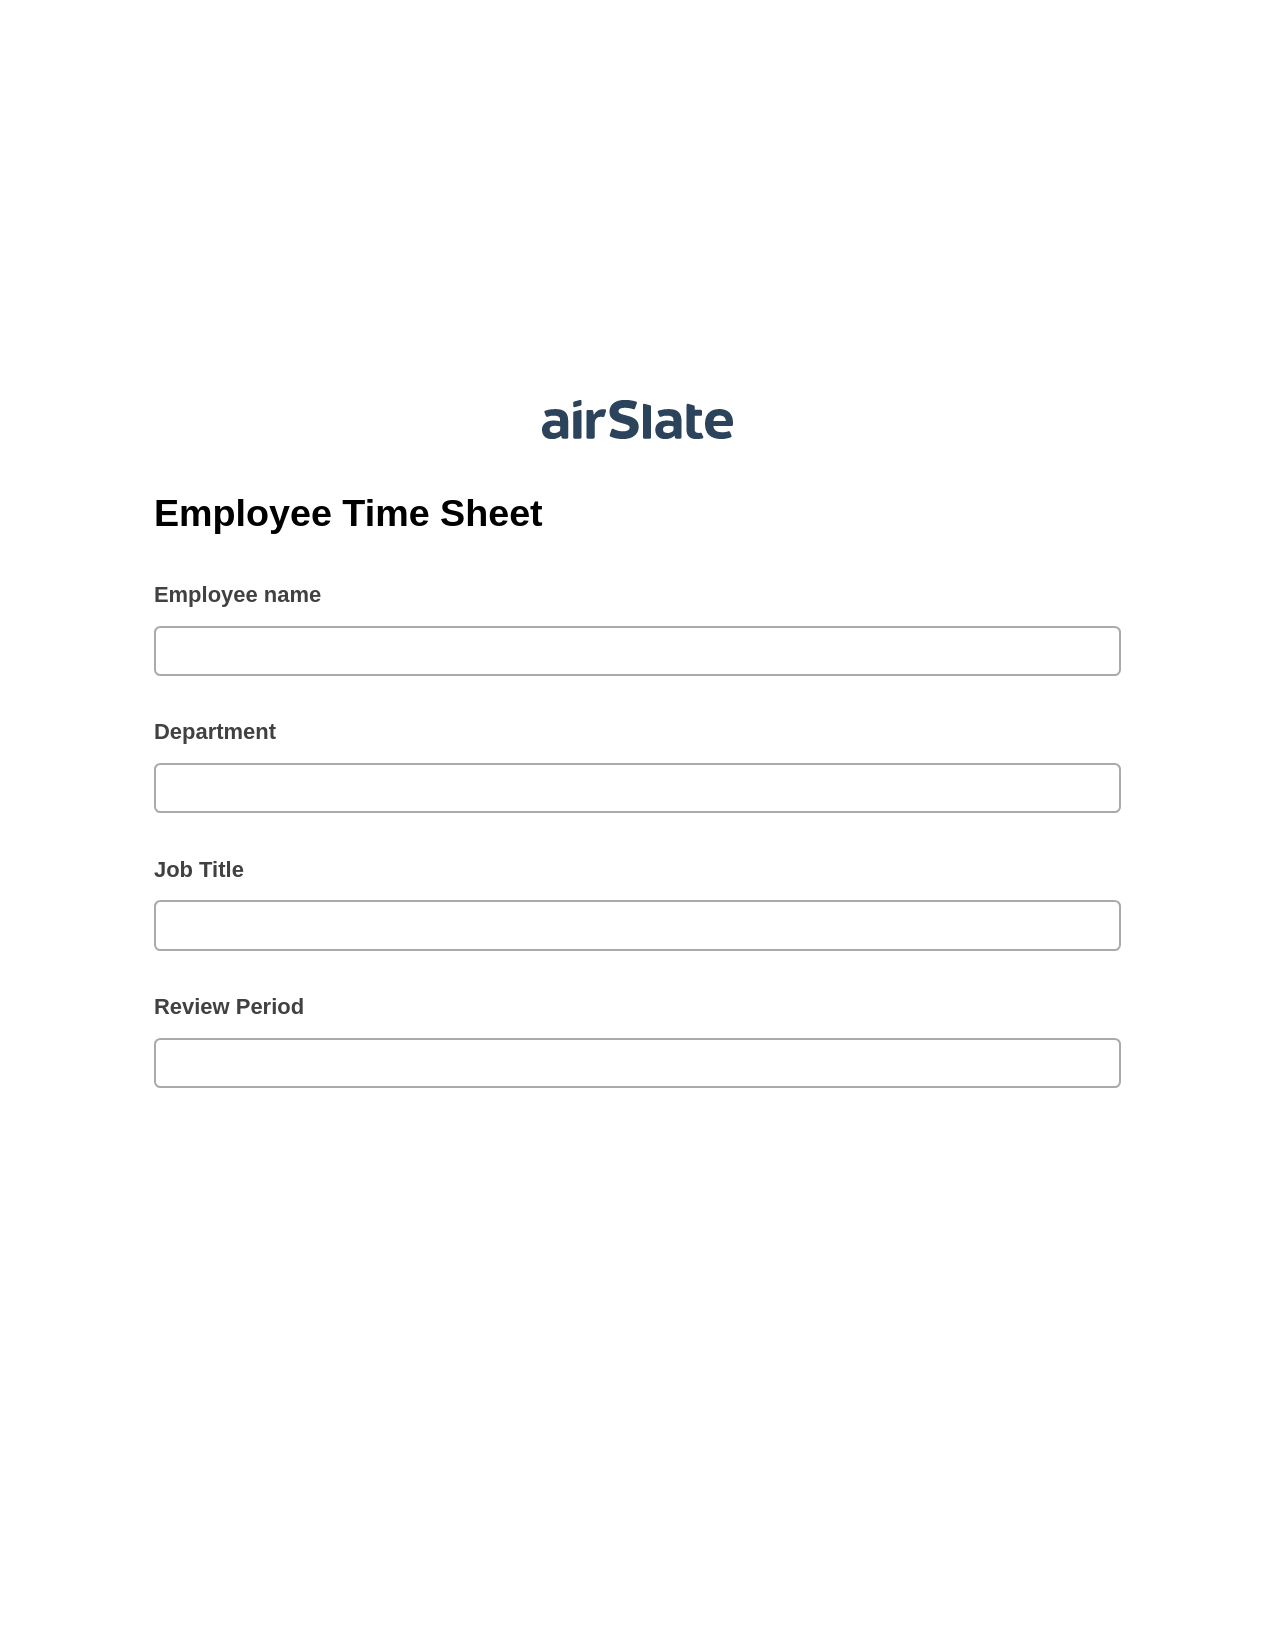 Multirole Employee Time Sheet Pre-fill Document Bot, Slack Notification Bot, Export to Smartsheet